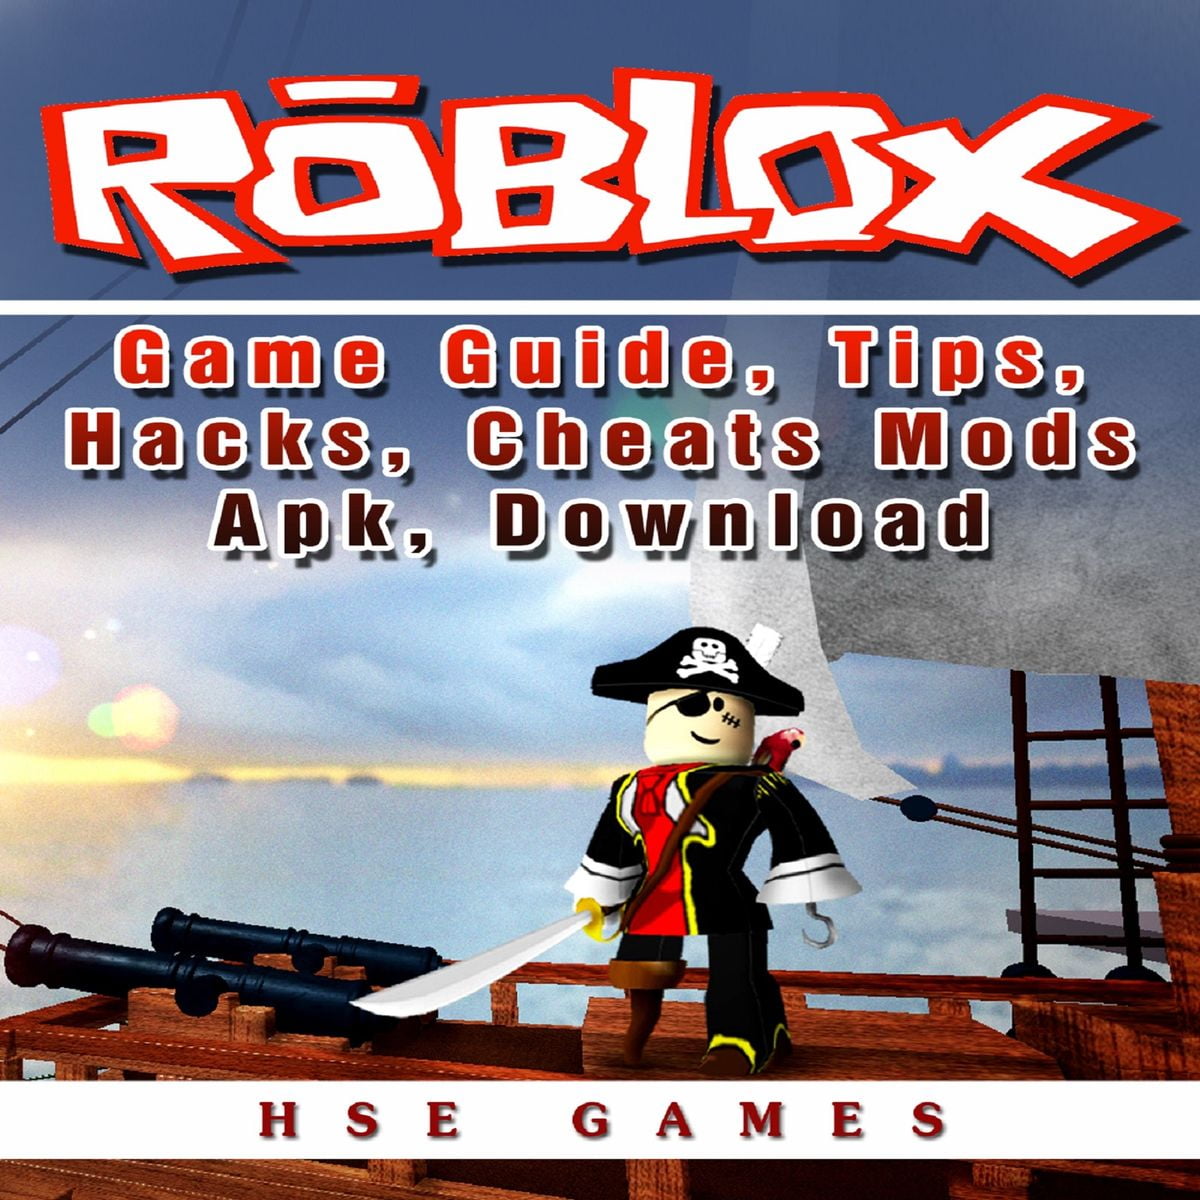 Roblox Game Guide Tips Hacks Cheats Mods Apk Download Audiobook Walmart Com Walmart Com - movie downloade gamehq roblox most amazing bakery